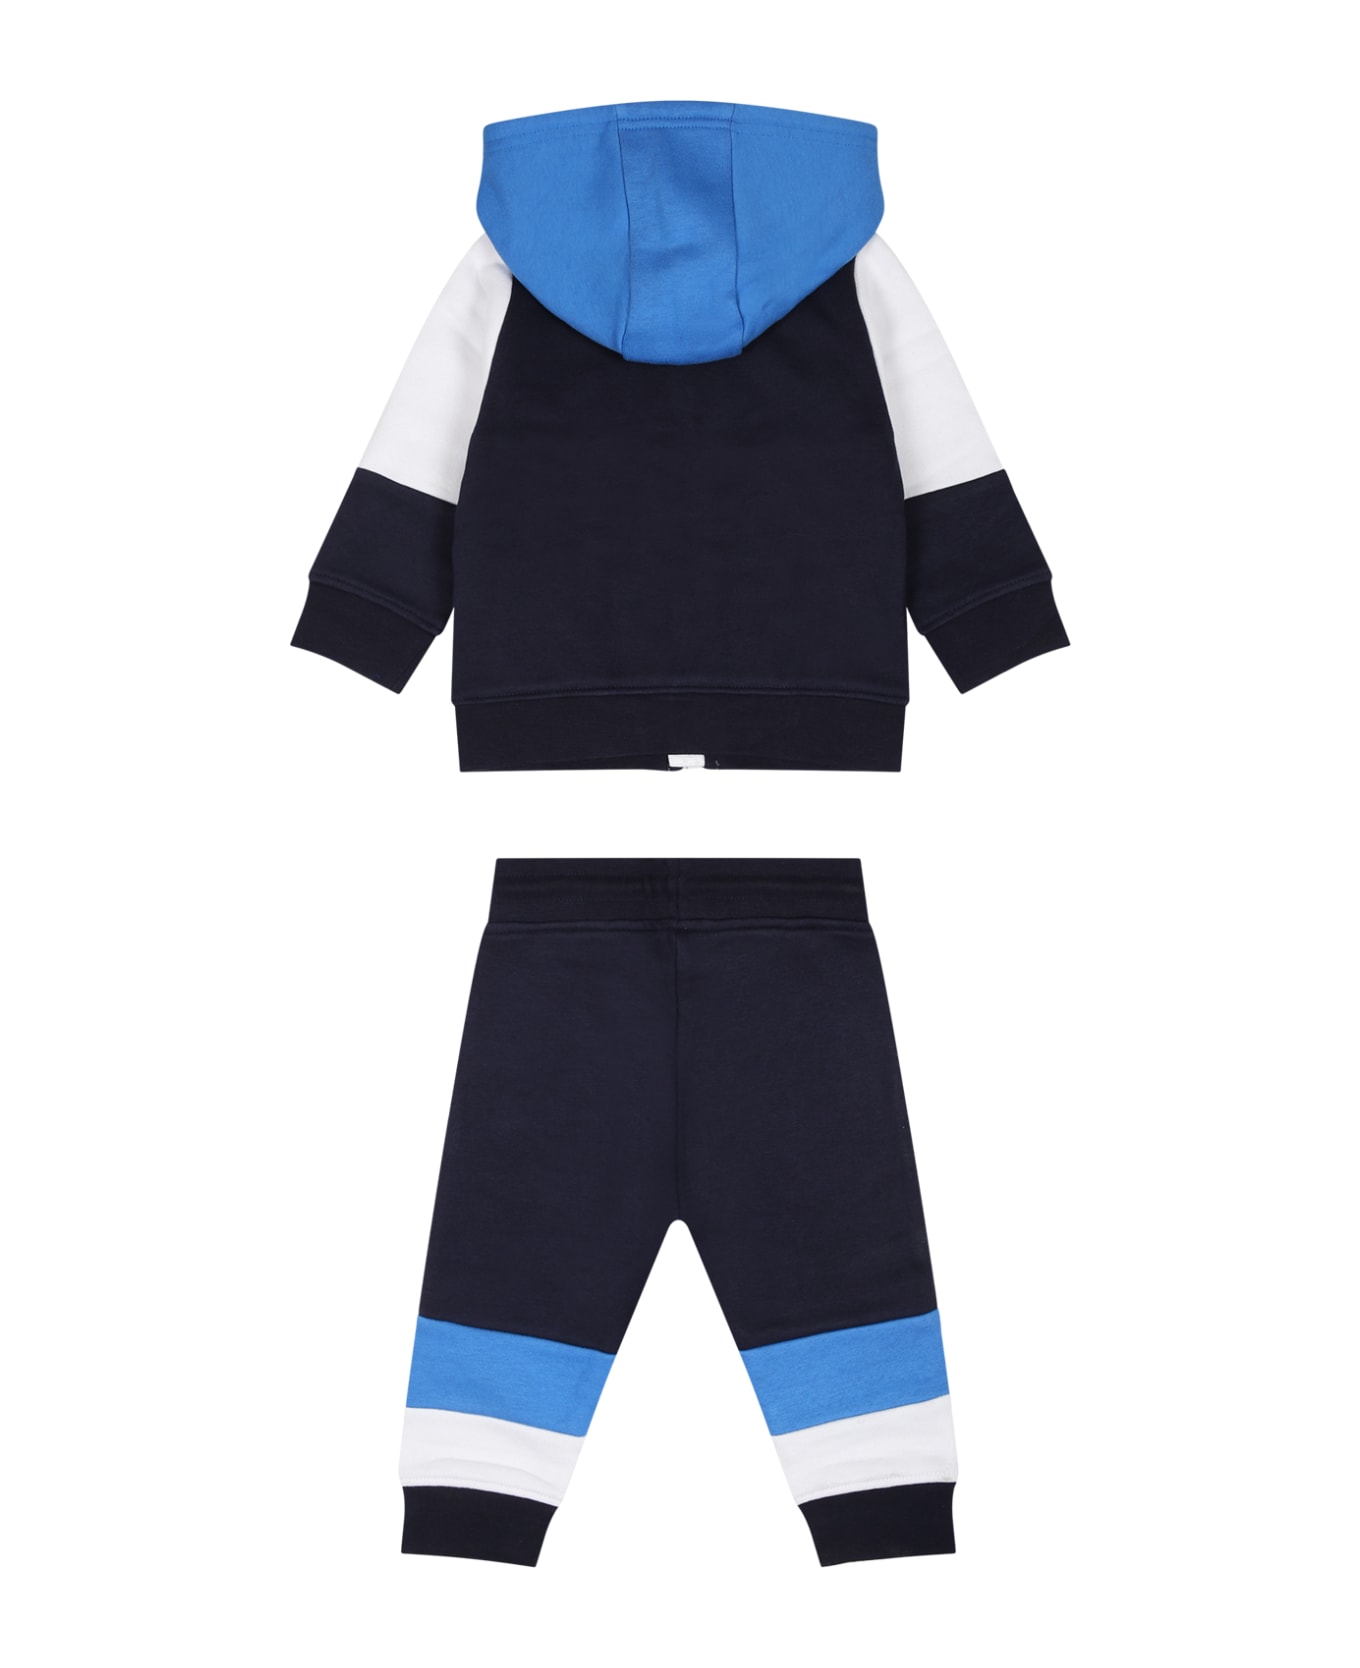 Hugo Boss Multicolor Sports Suit For Newborn - Multicolor